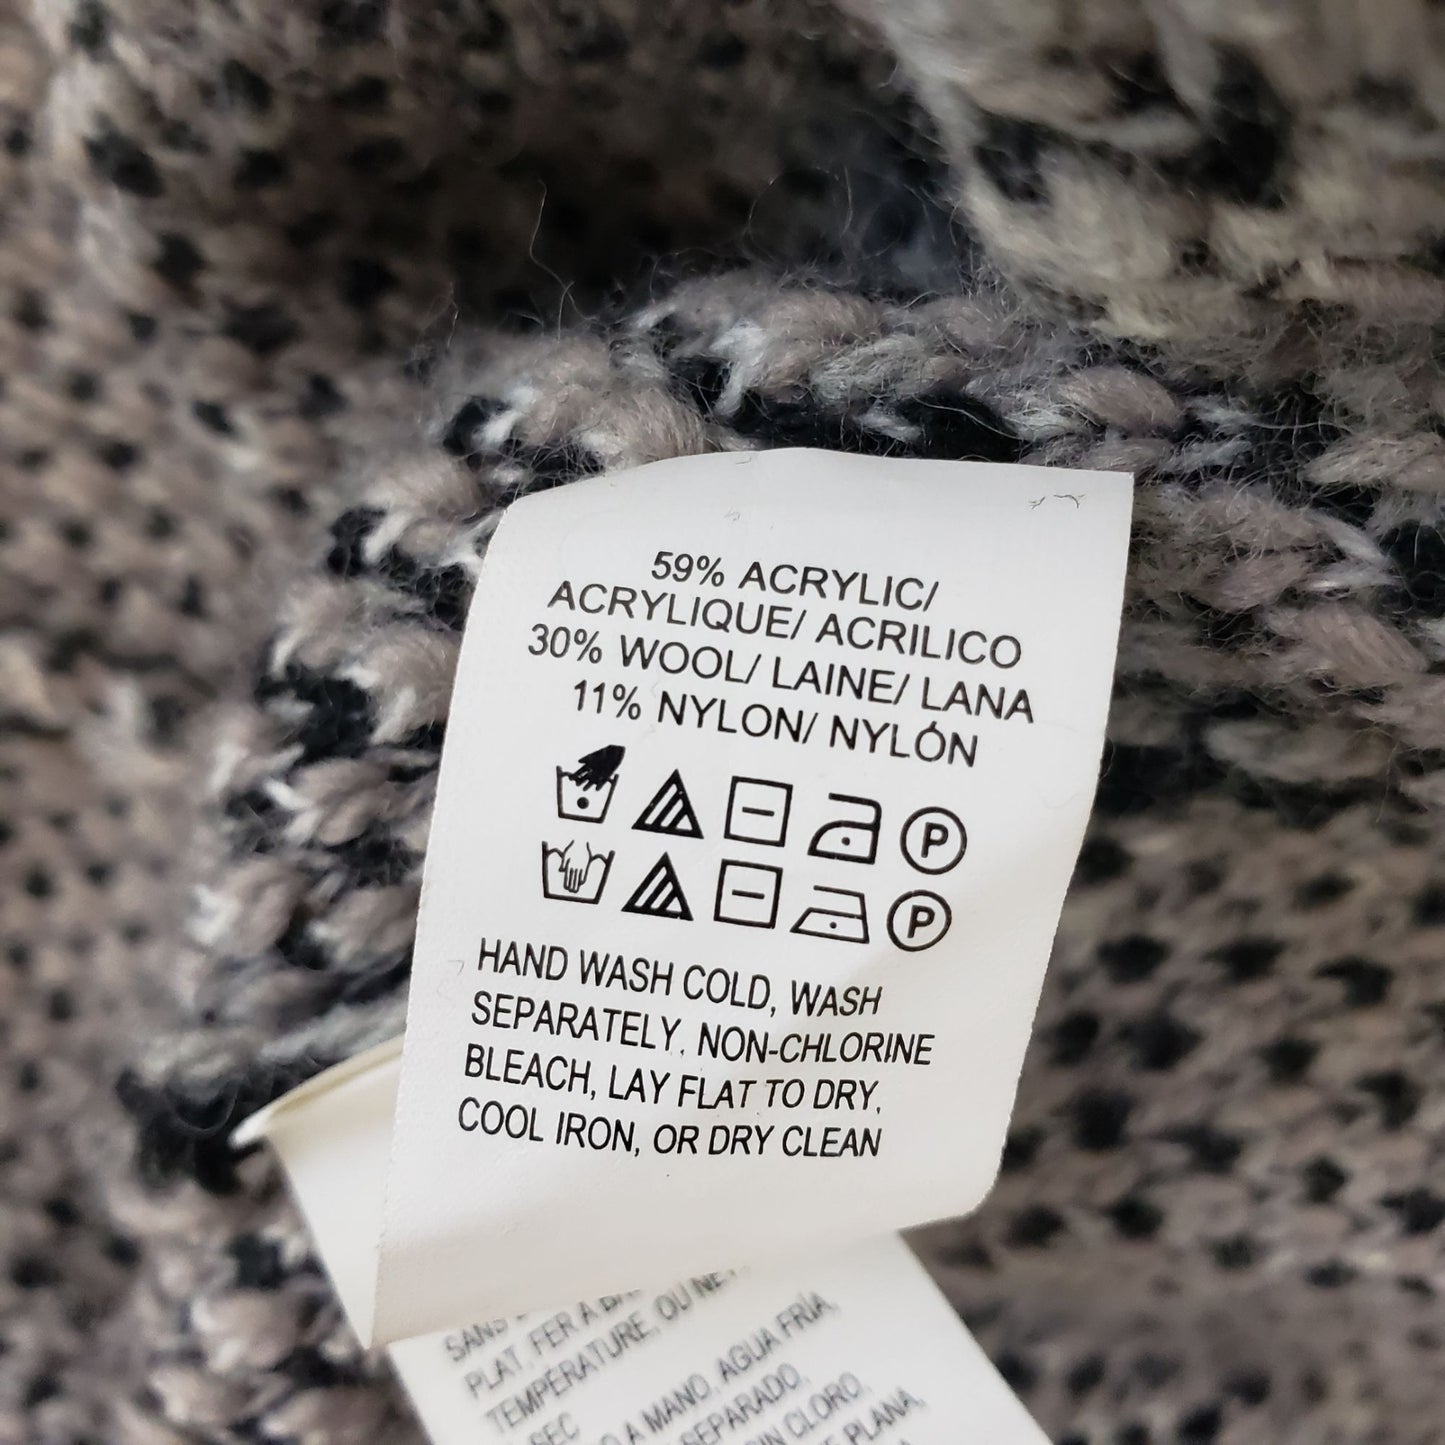 Lucky Brand Wool Blend Aztec Print Open Cardigan Sweater Size XS/S